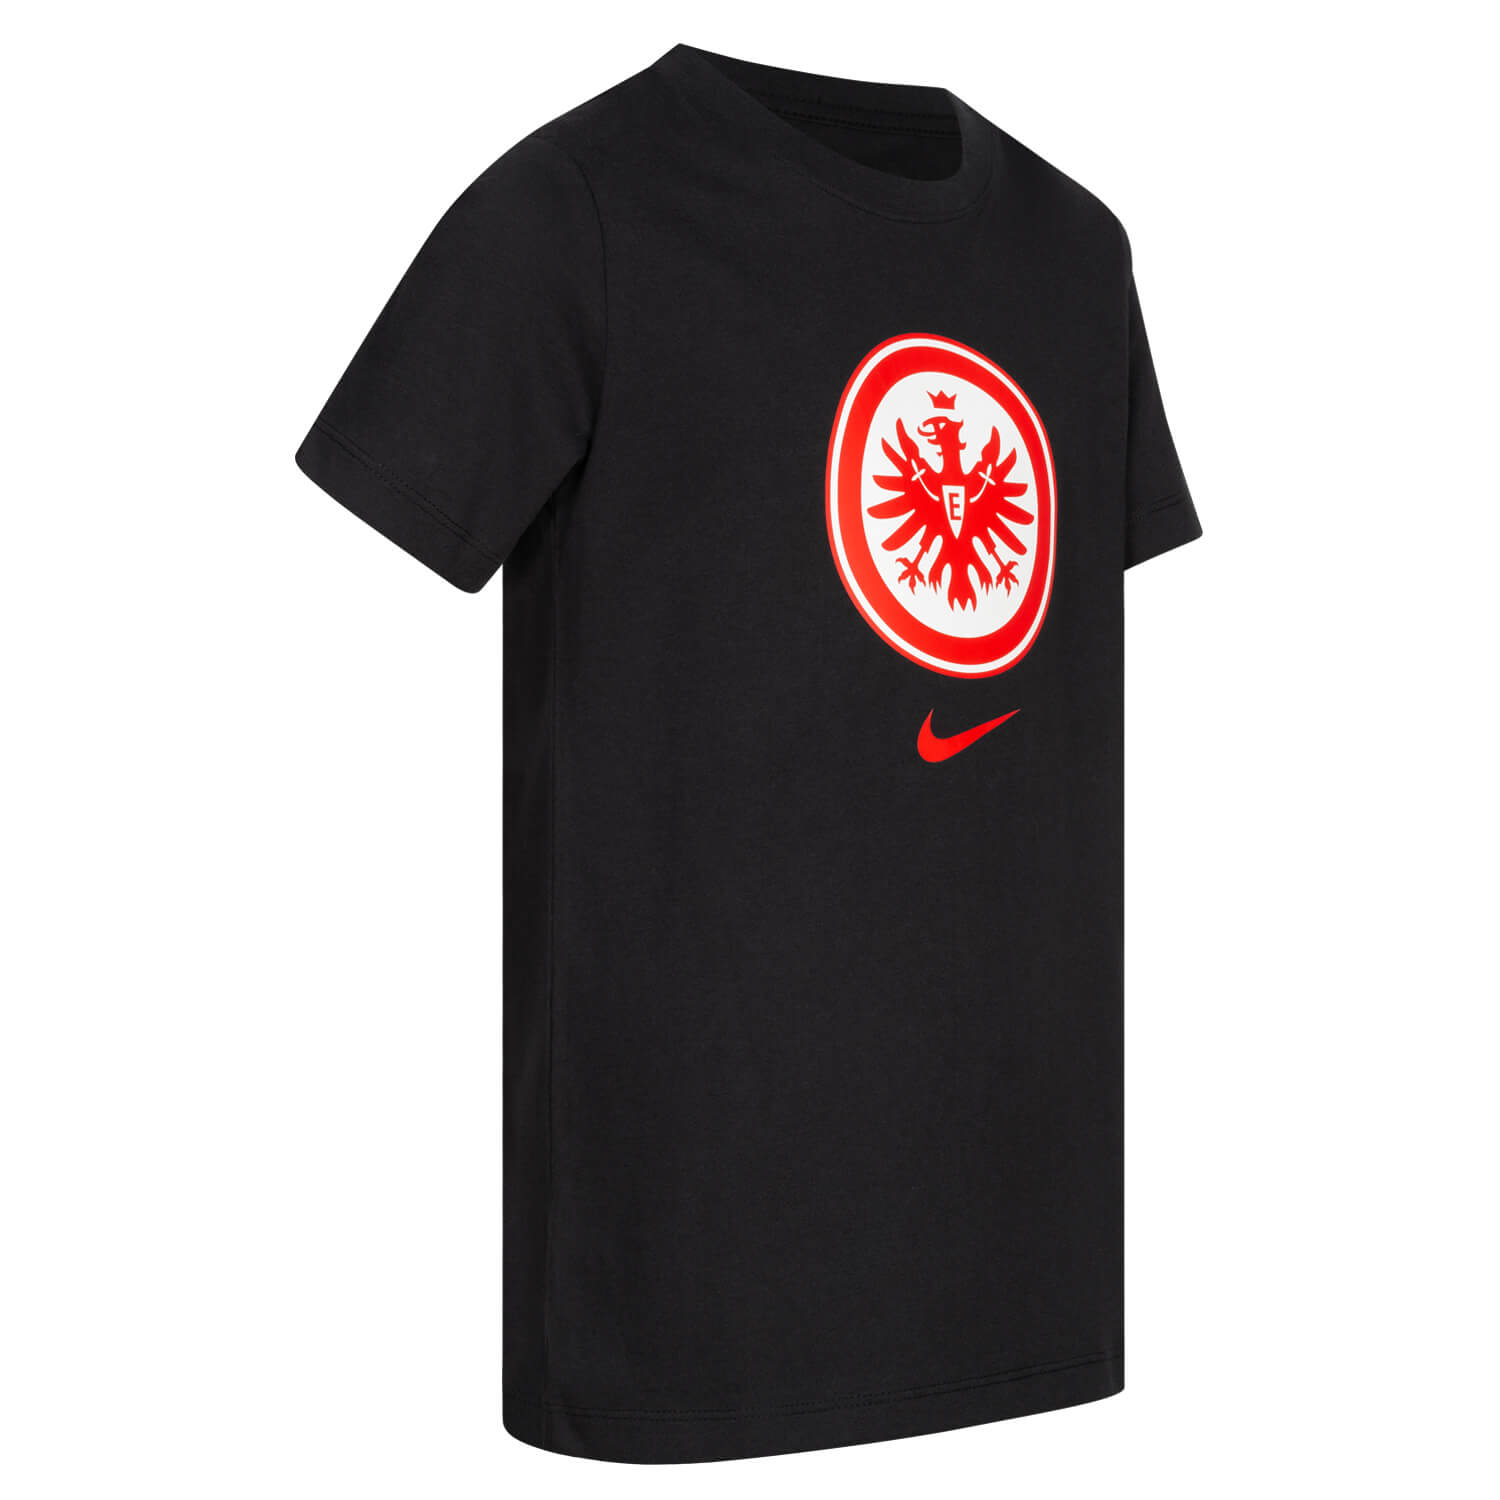 Bild 4: Nike Kids T-Shirt 23 Schwarz